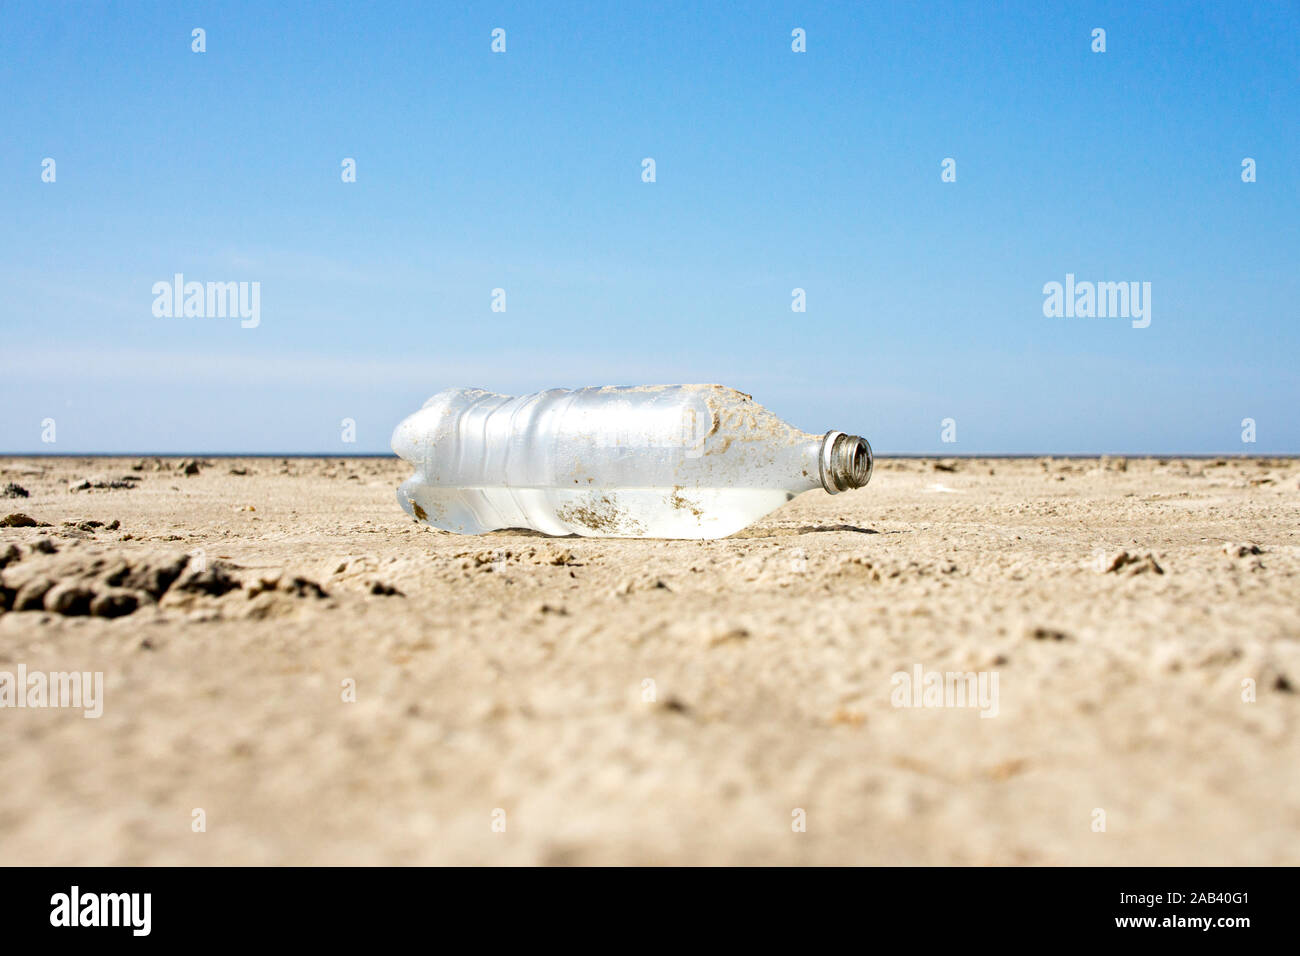 Eine angespülte Kunststoffflasche am Nordseestrand |A plastic bottle stranded on the North Sea beach| Stock Photo